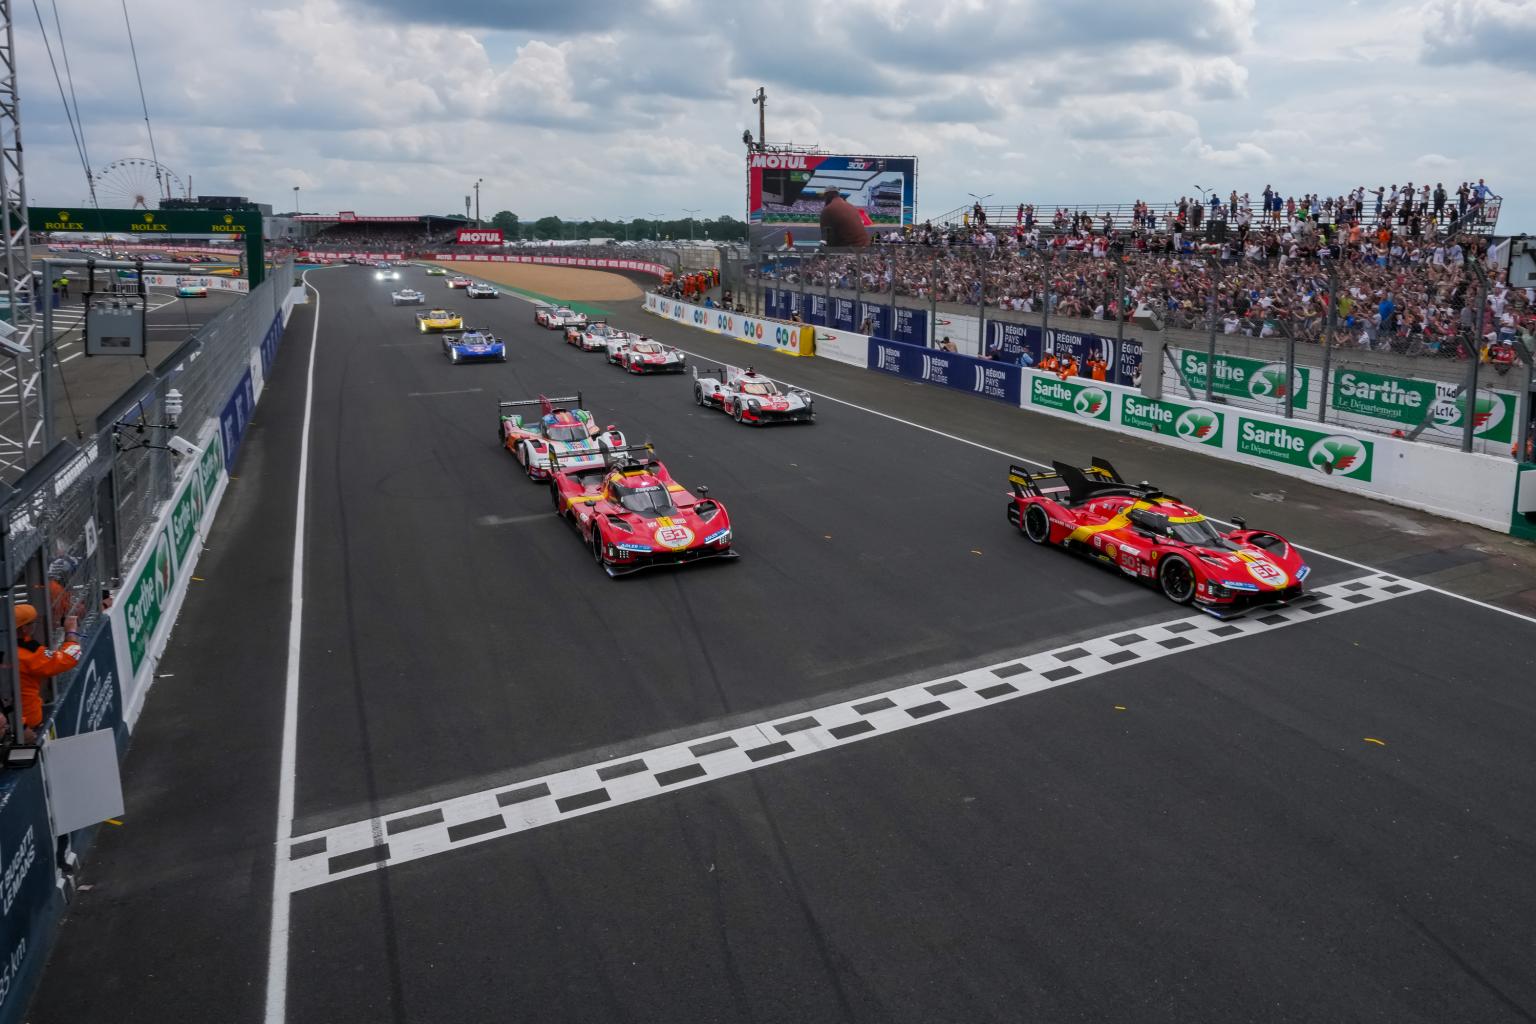 Ferrari vence Le Mans 2023